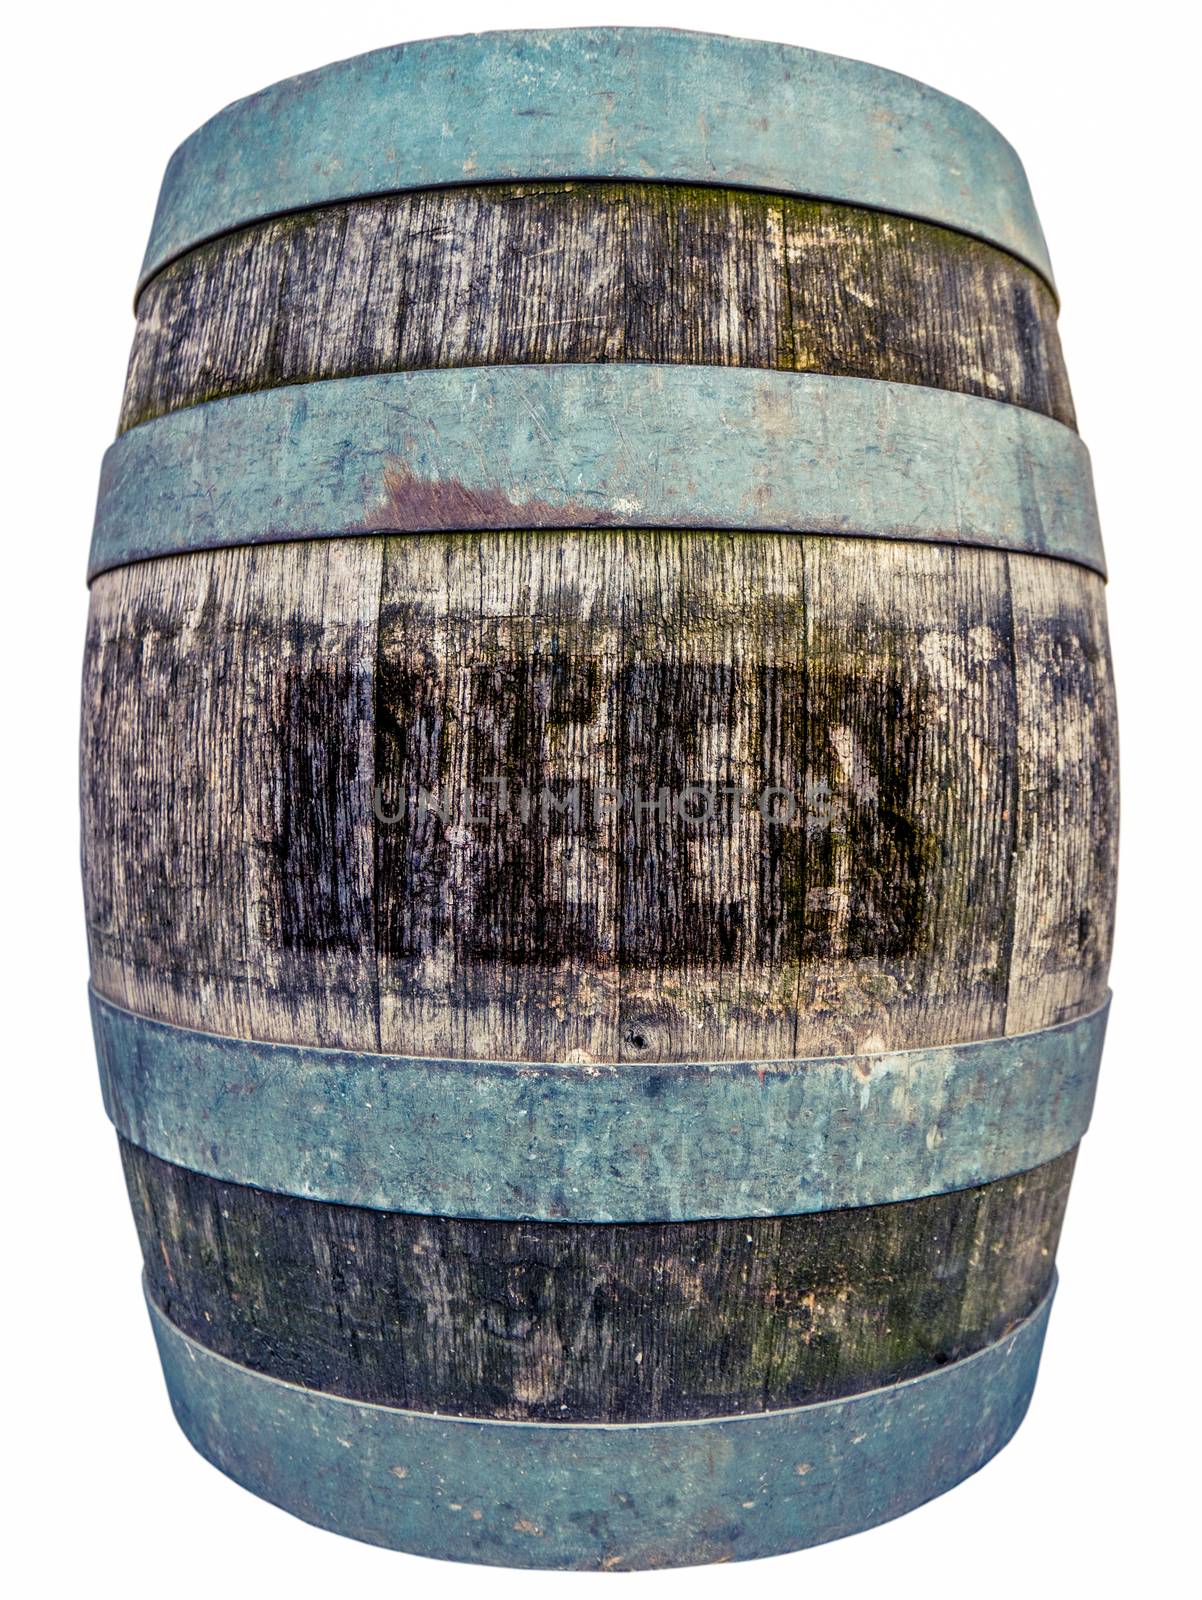 Isolated Wooden Vintage Barrel Or Keg Of Beer